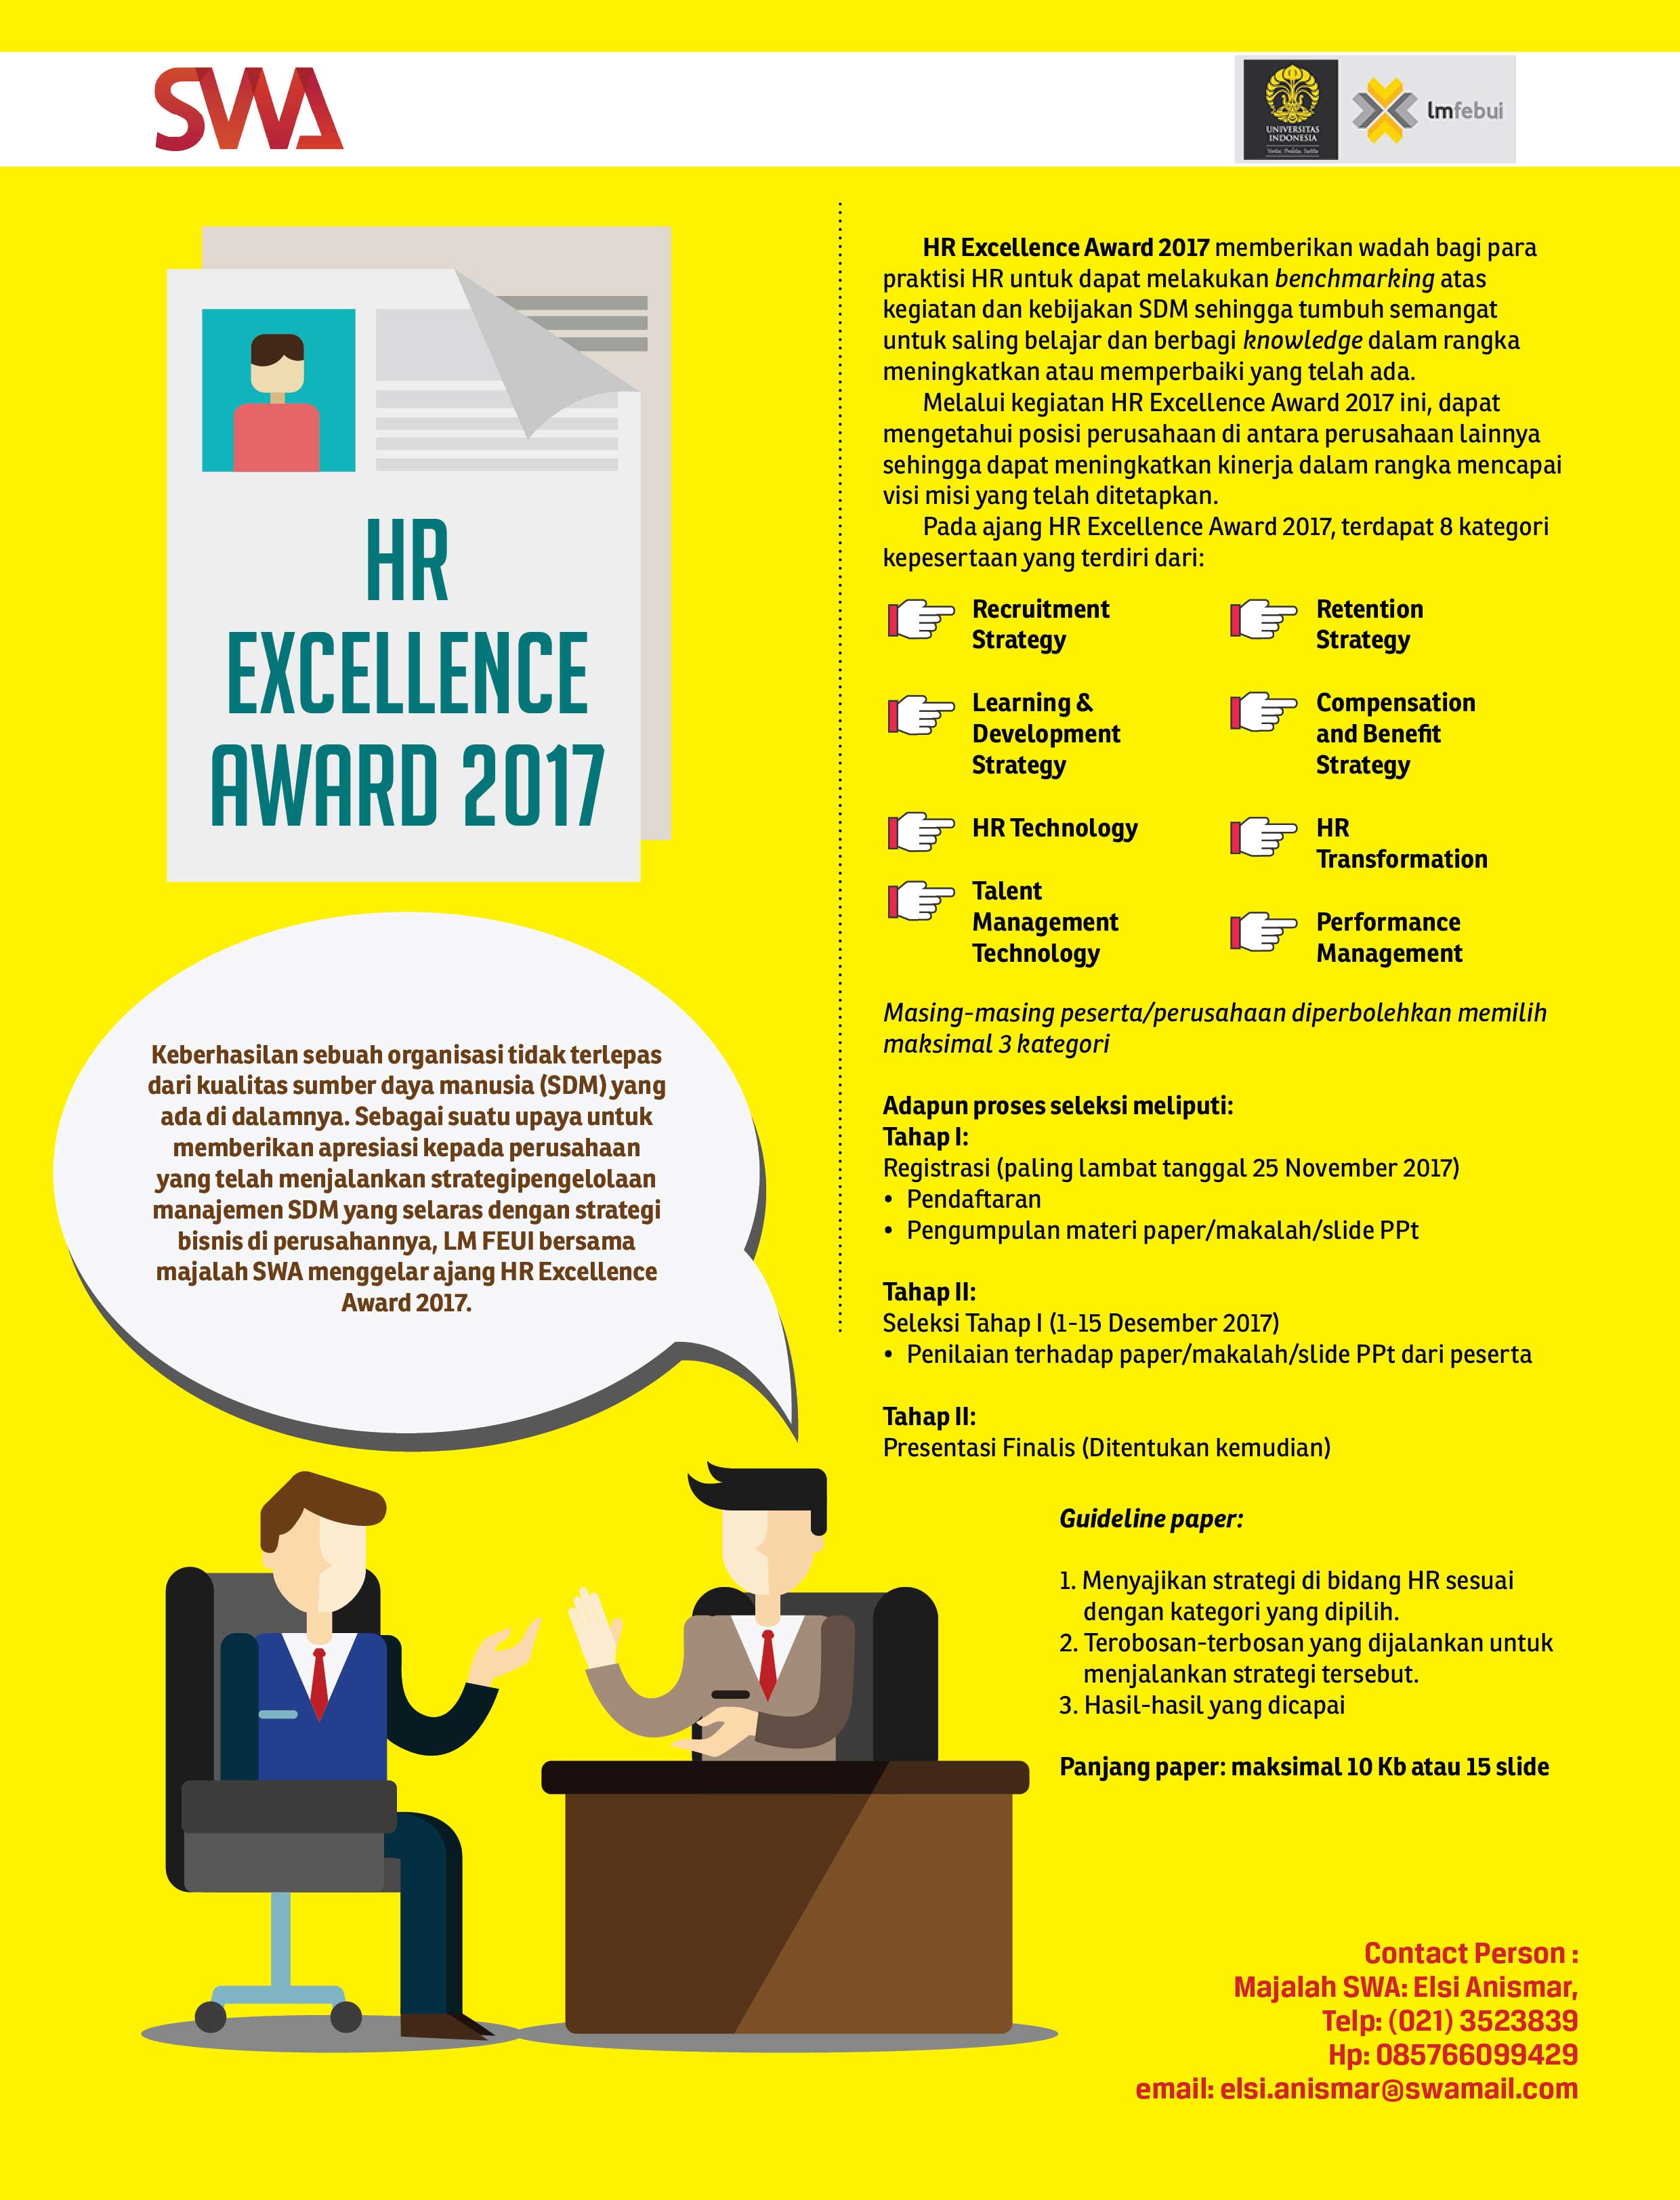 HR Excellence Award 2015